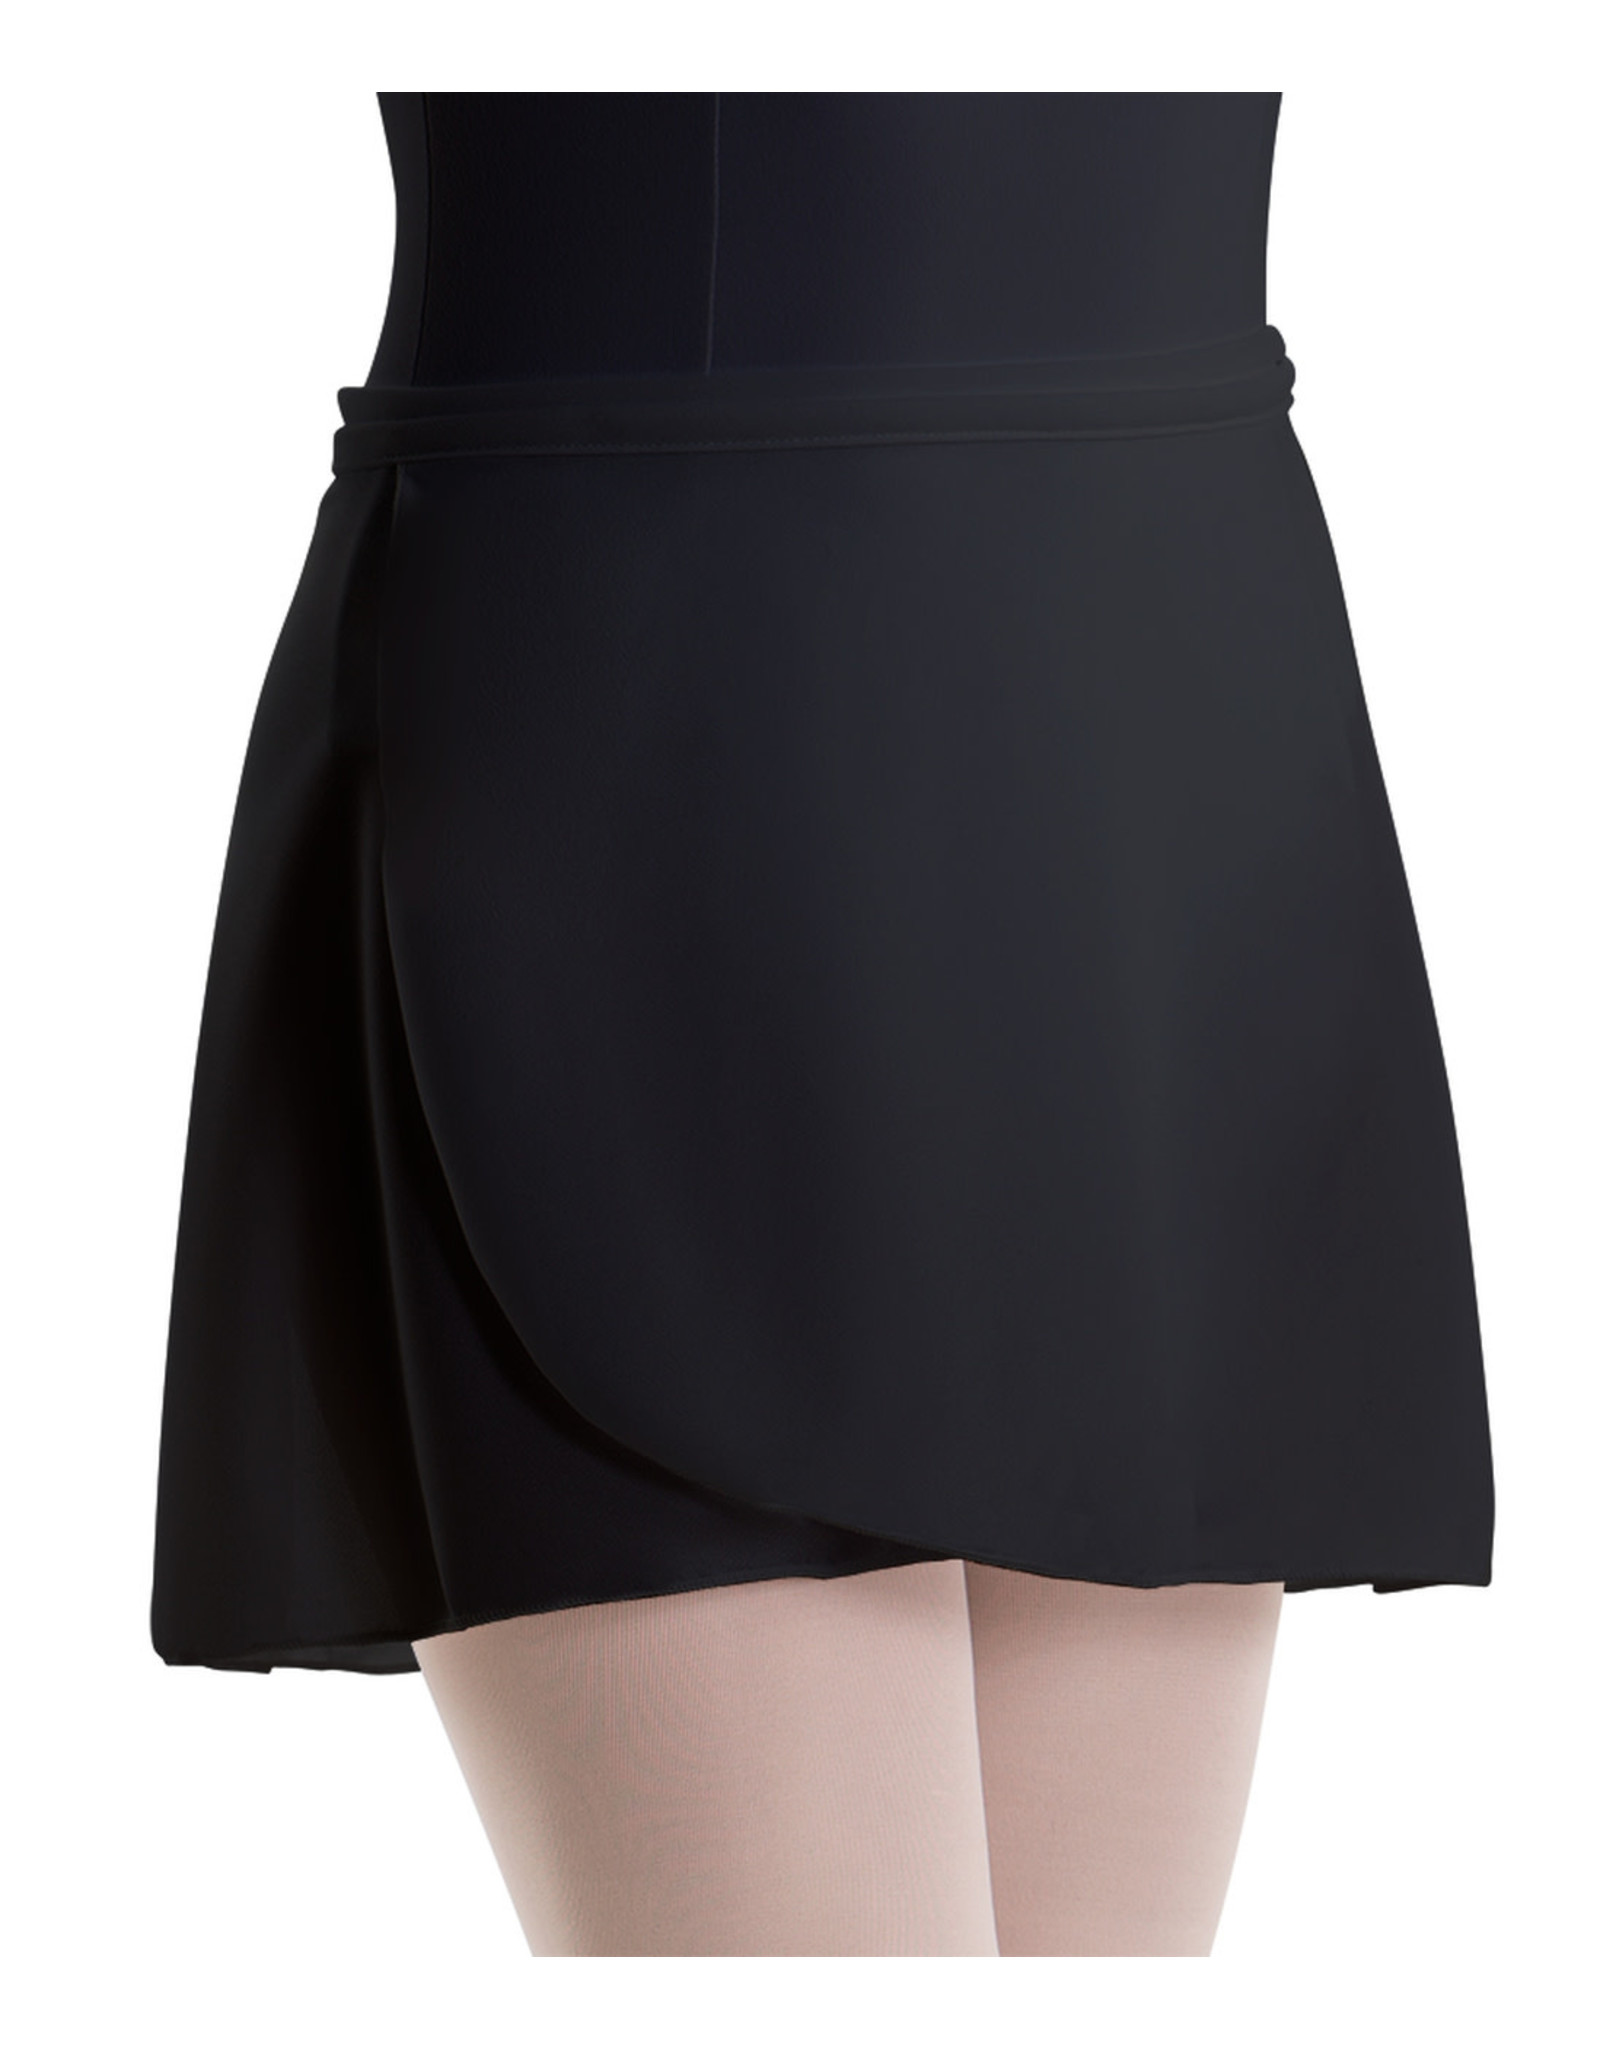 MOTIONWEAR Motionwear Crepe Wrap Tie Short Skirt 14" - Adult O/S - Black 1021